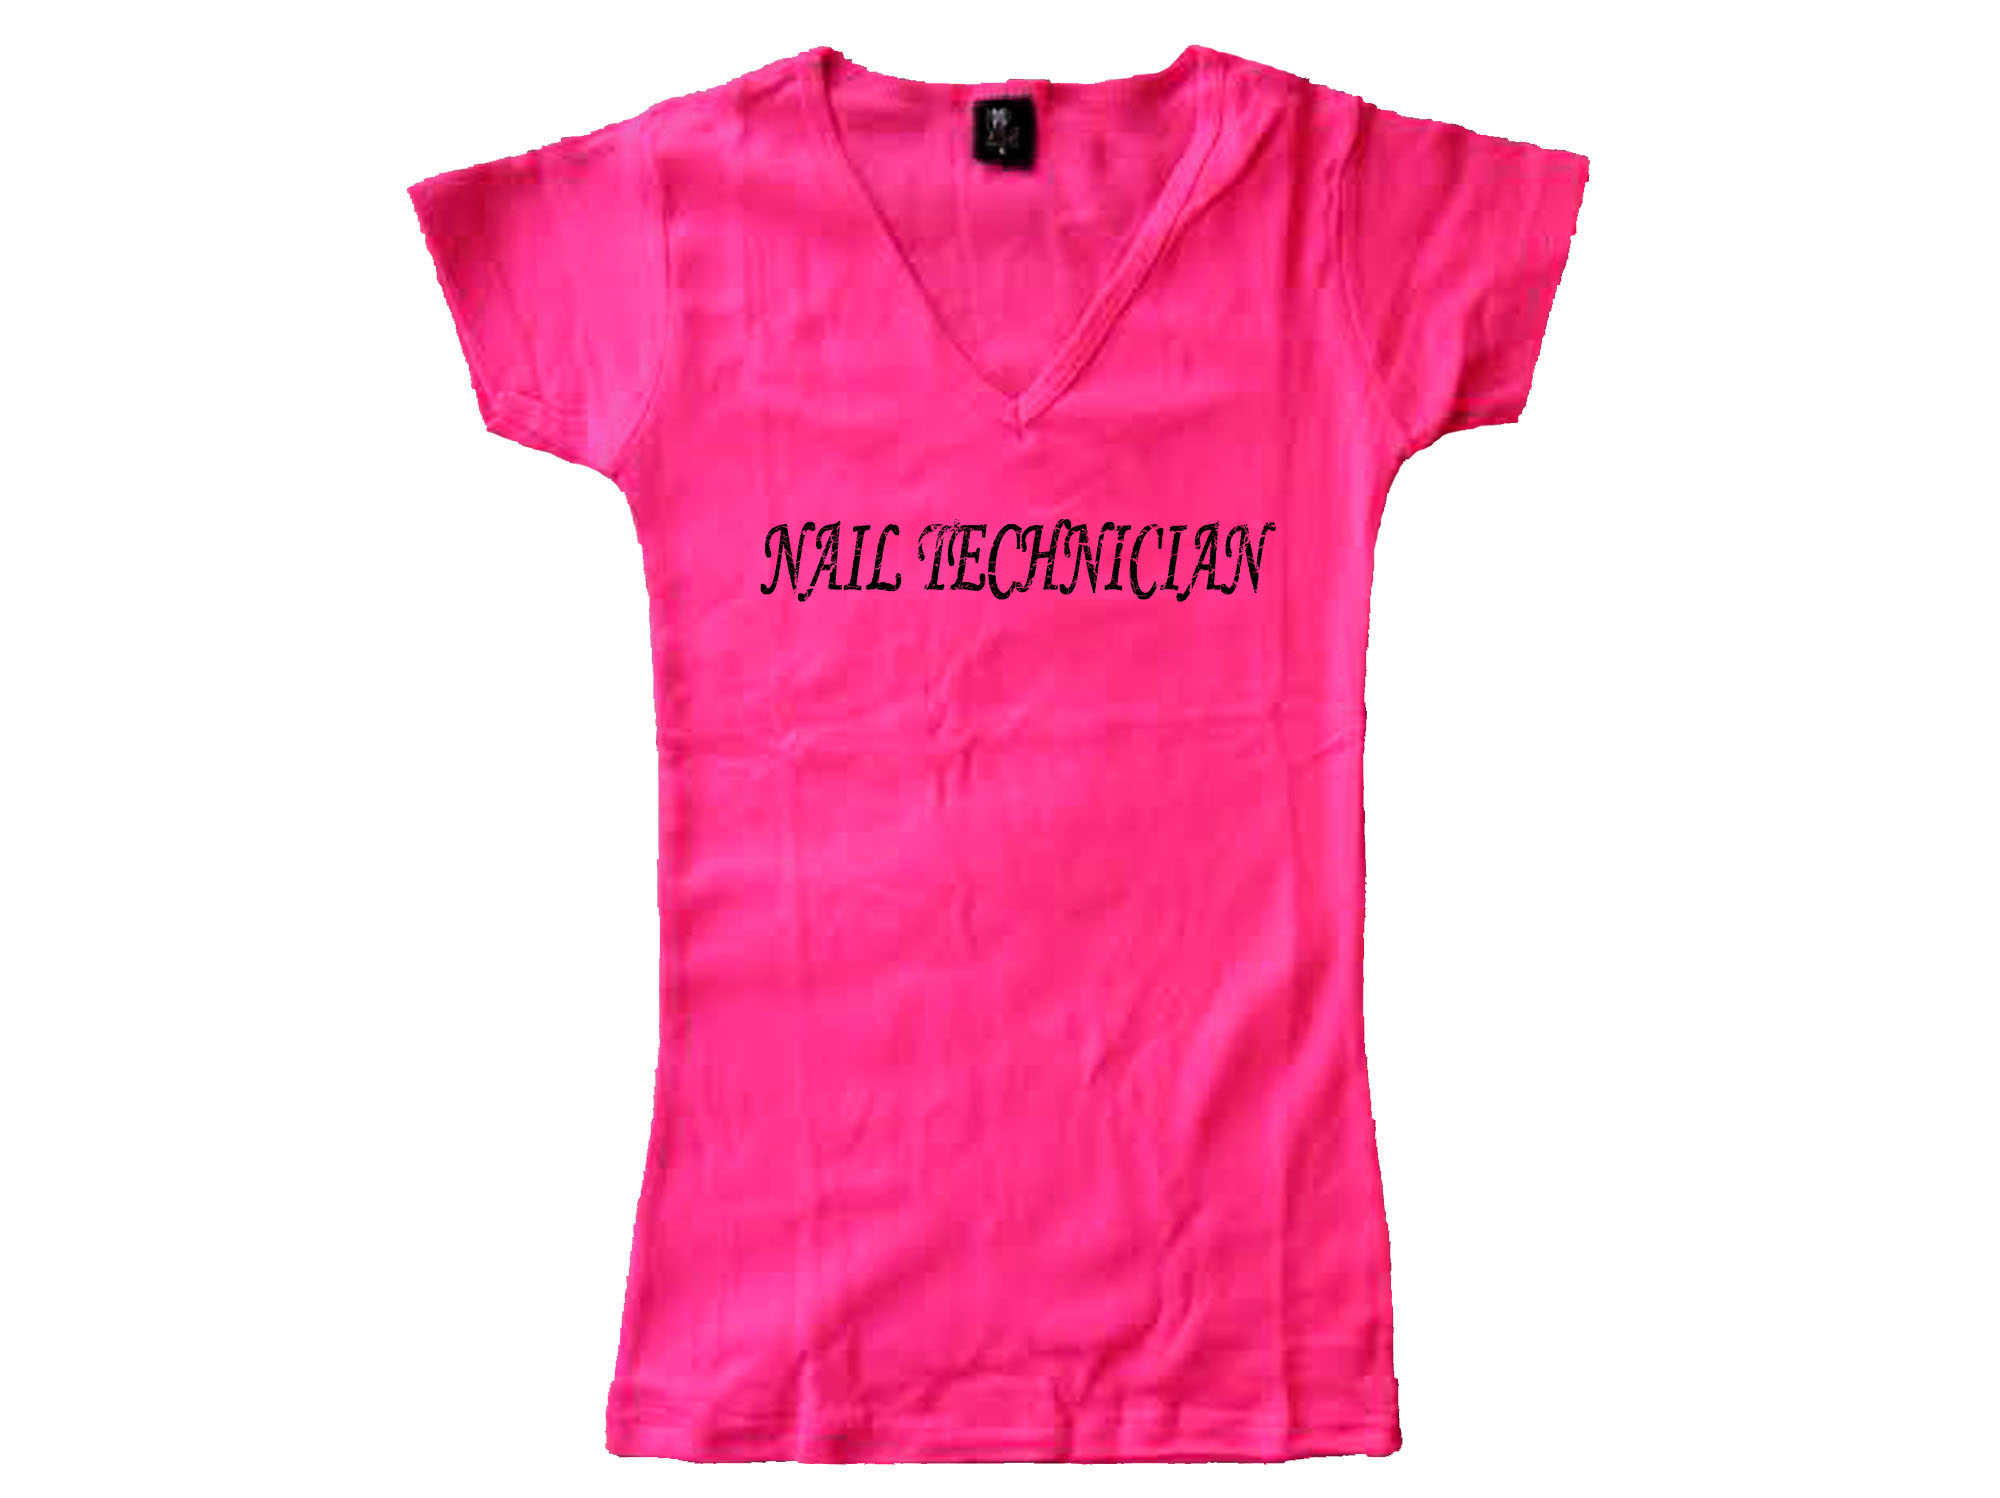 Nail tech technician pink t-shirt